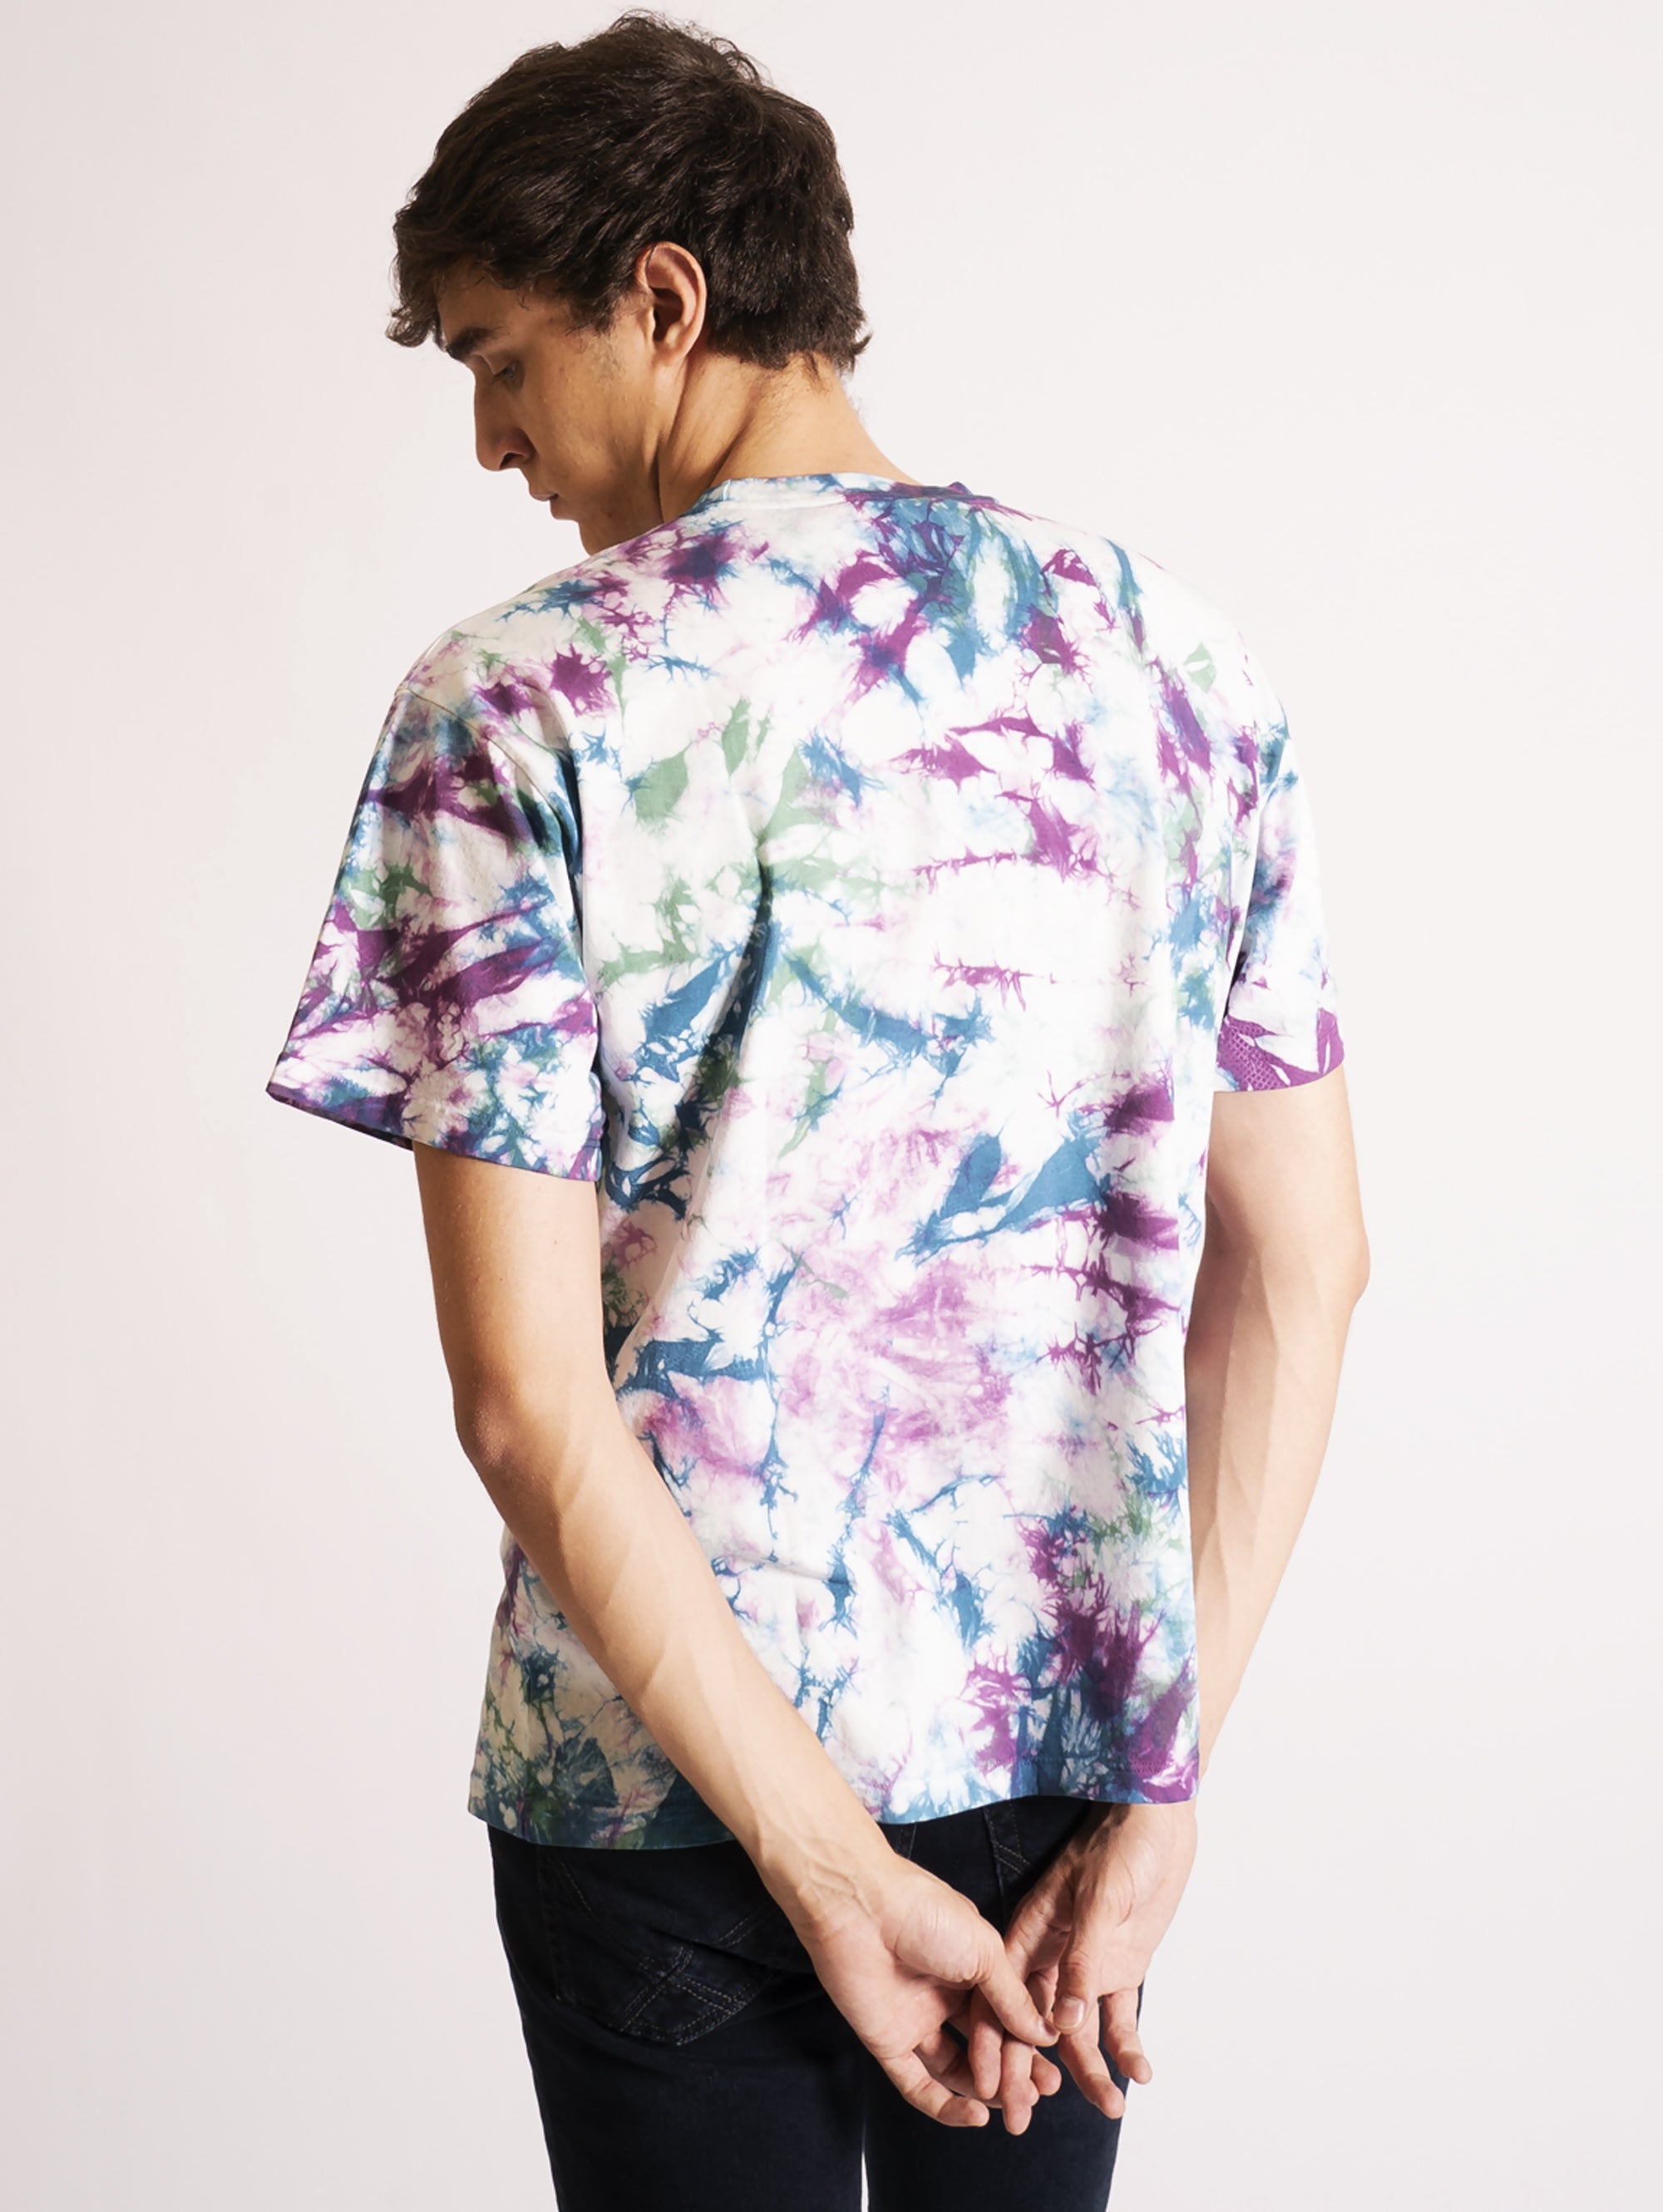 T-shirt with Tie Dye Print